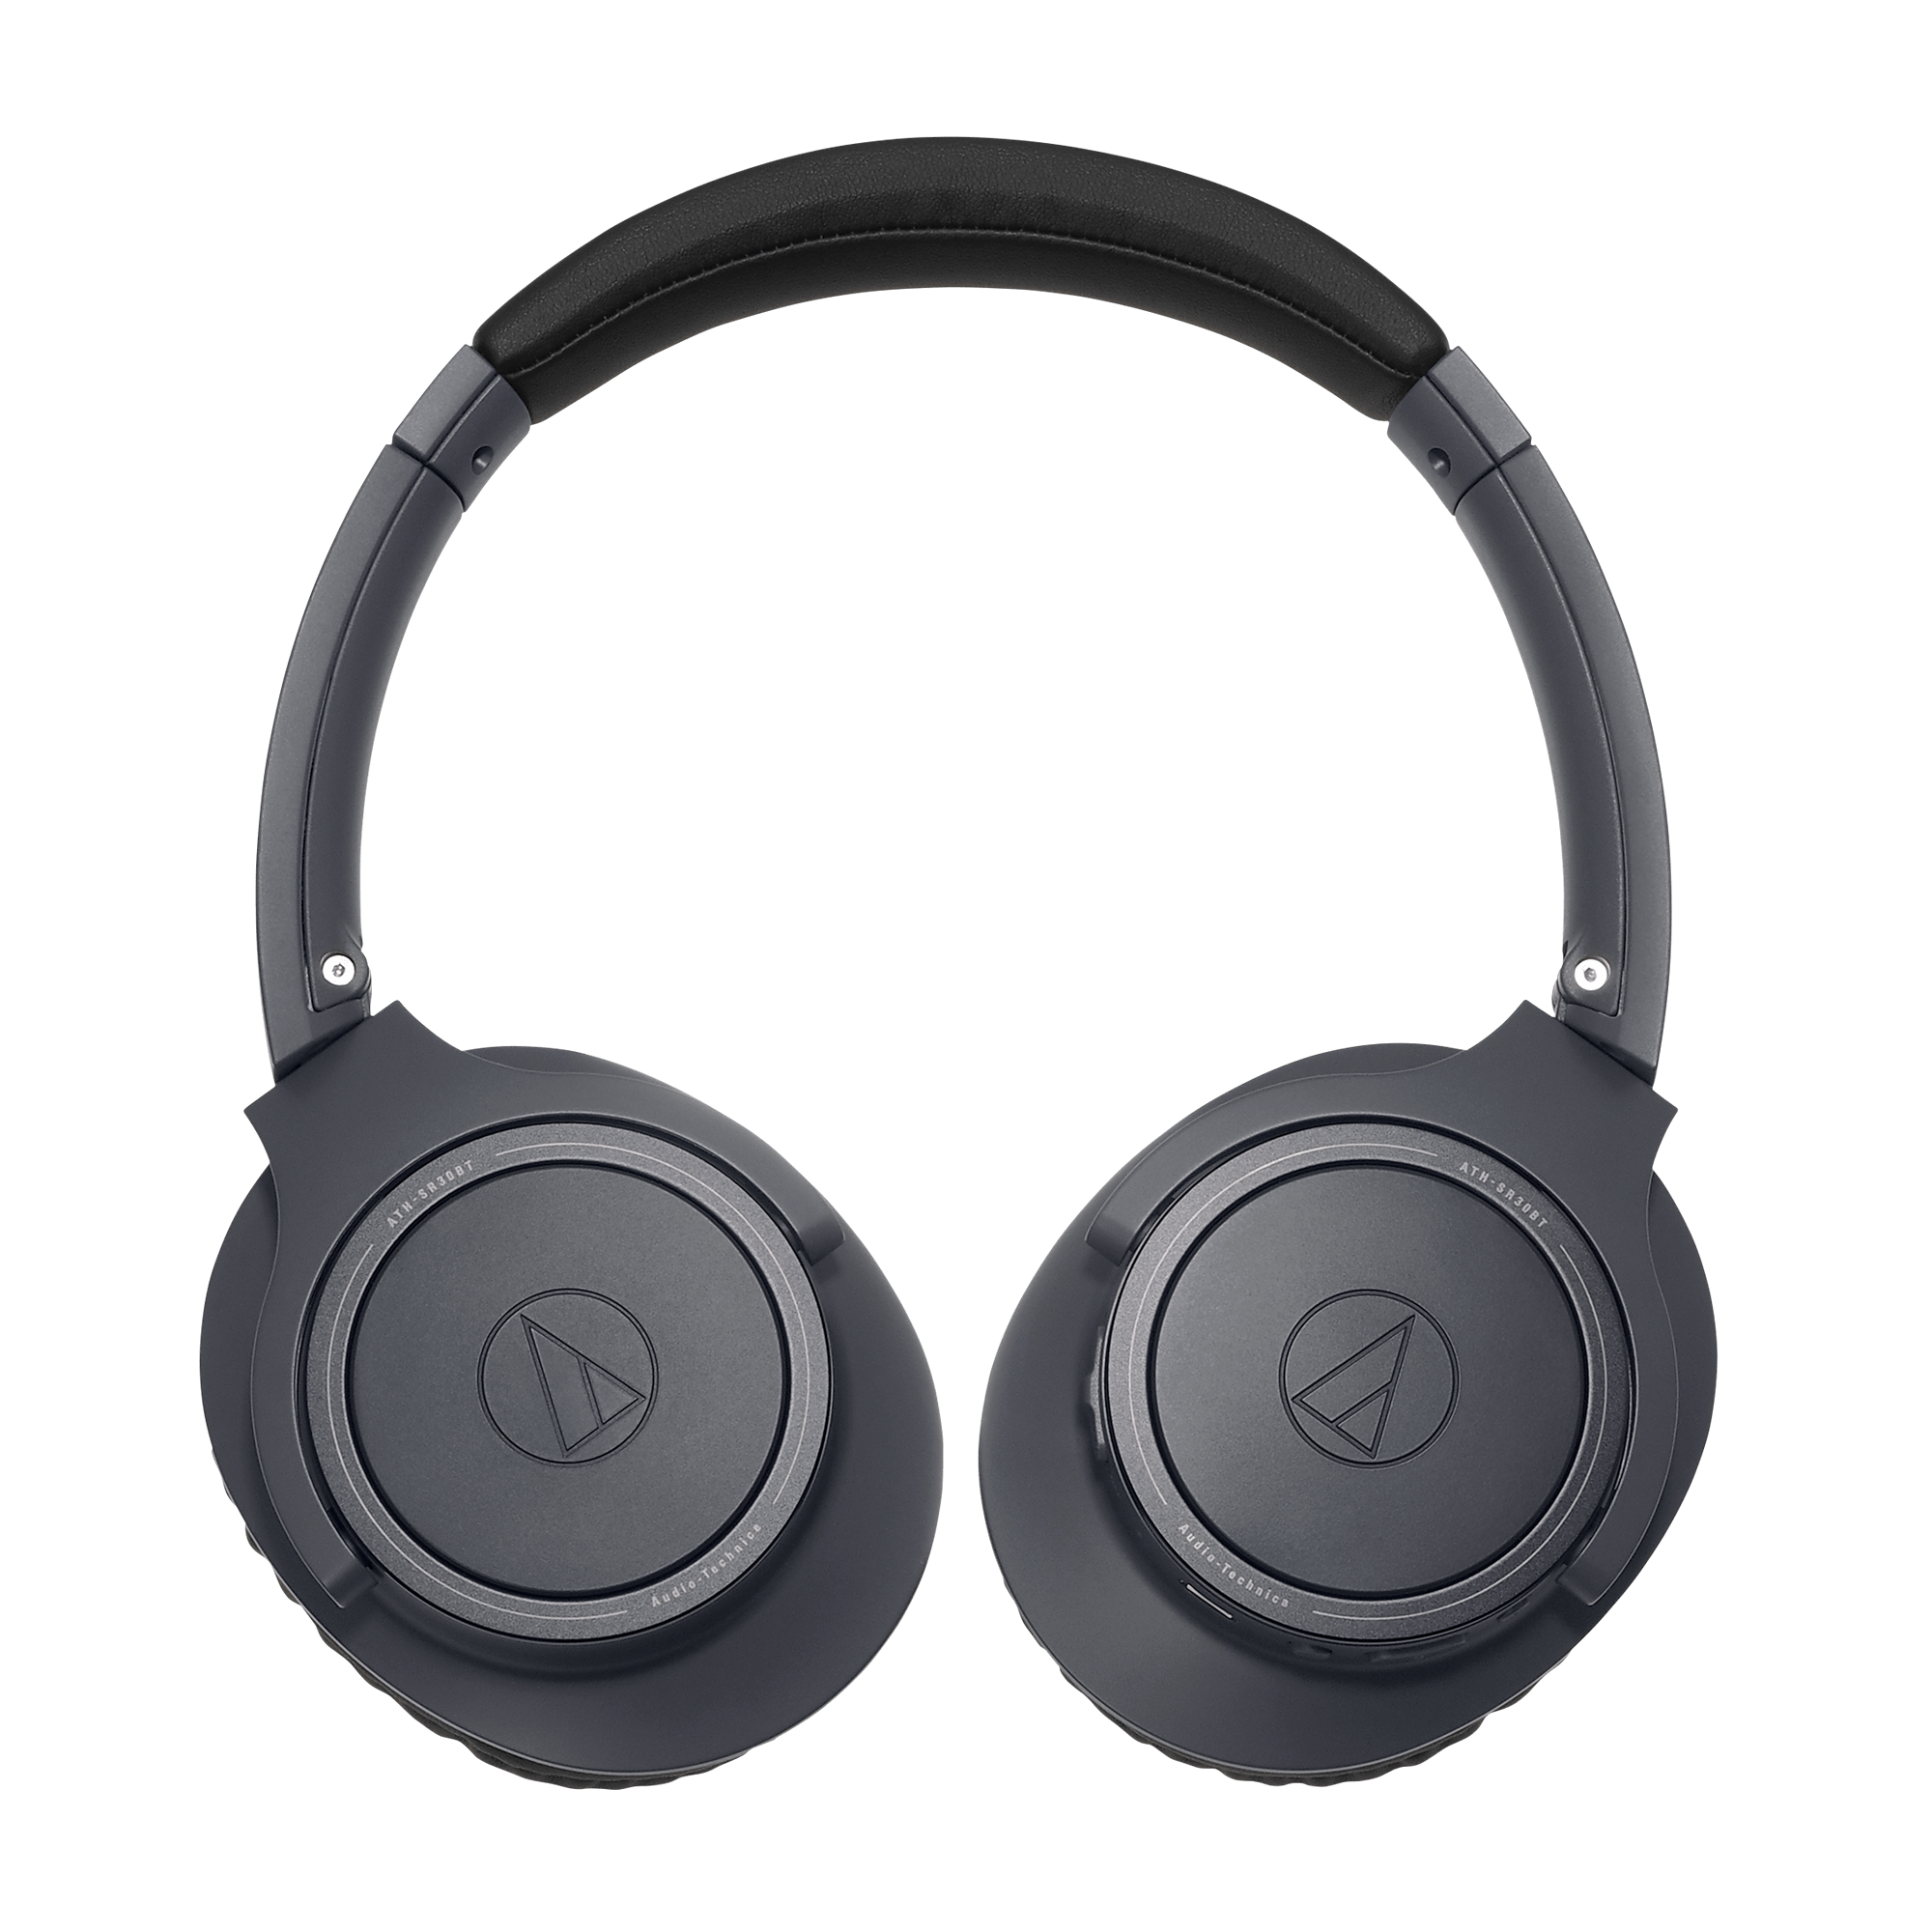 ATH-SR30BT Wireless Headphones | Audio-Technica